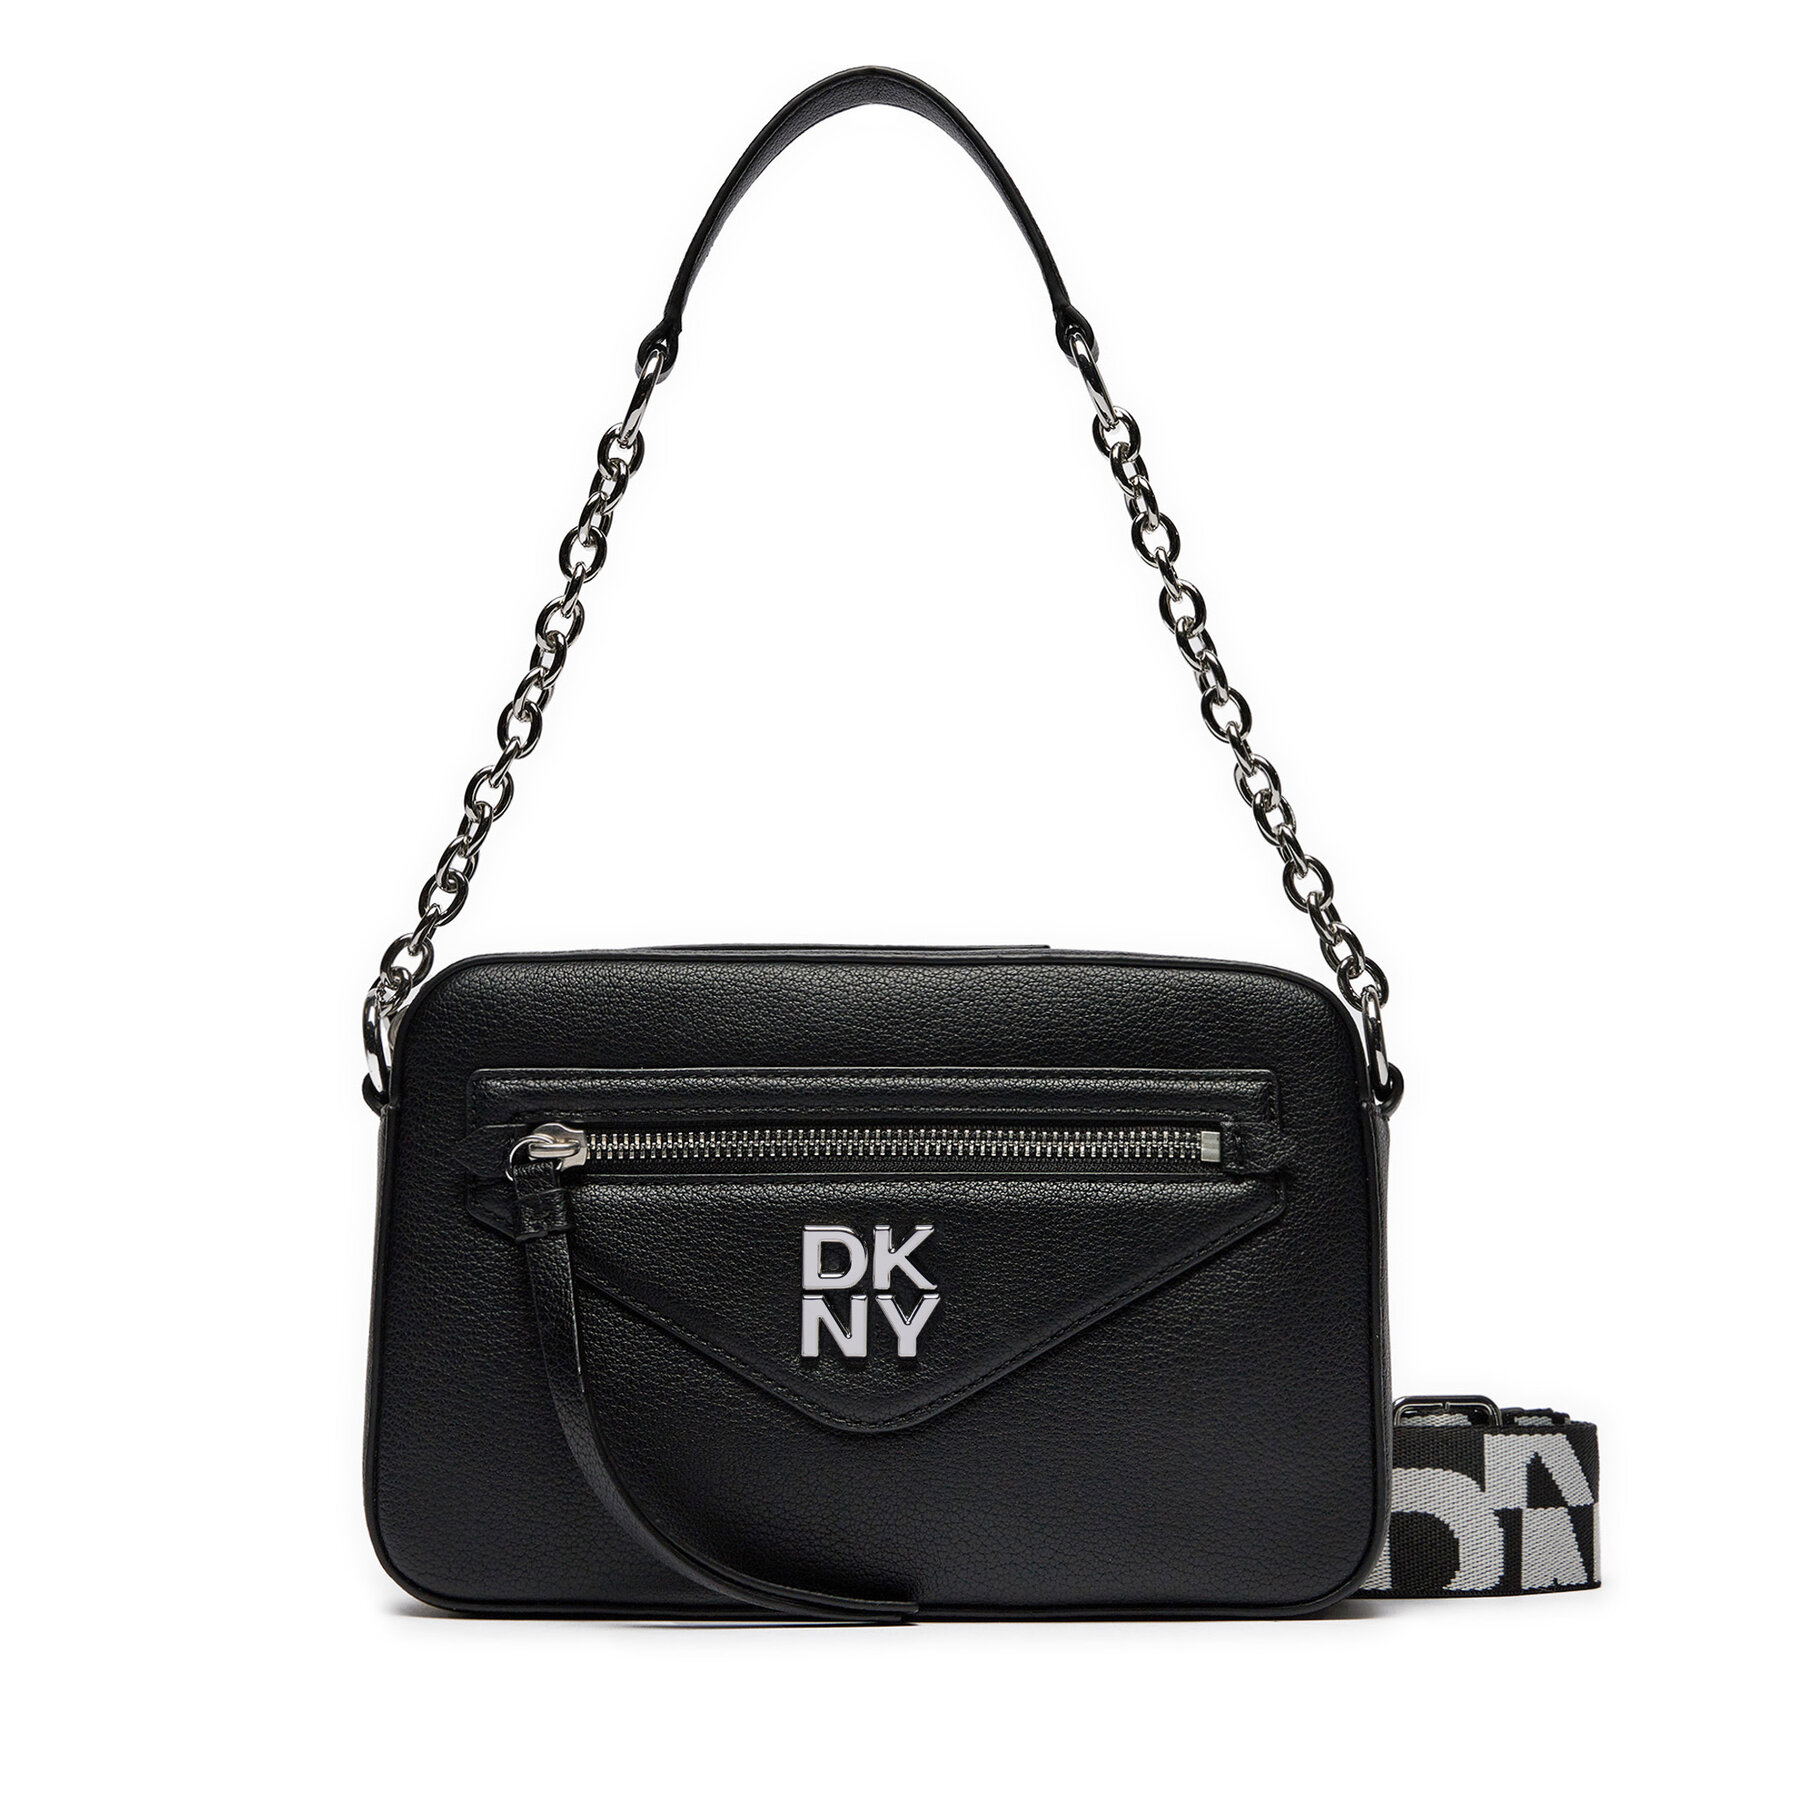 Handtasche DKNY Greenpoint Camera Ba R41EKB91 Black/Silver BSV von DKNY